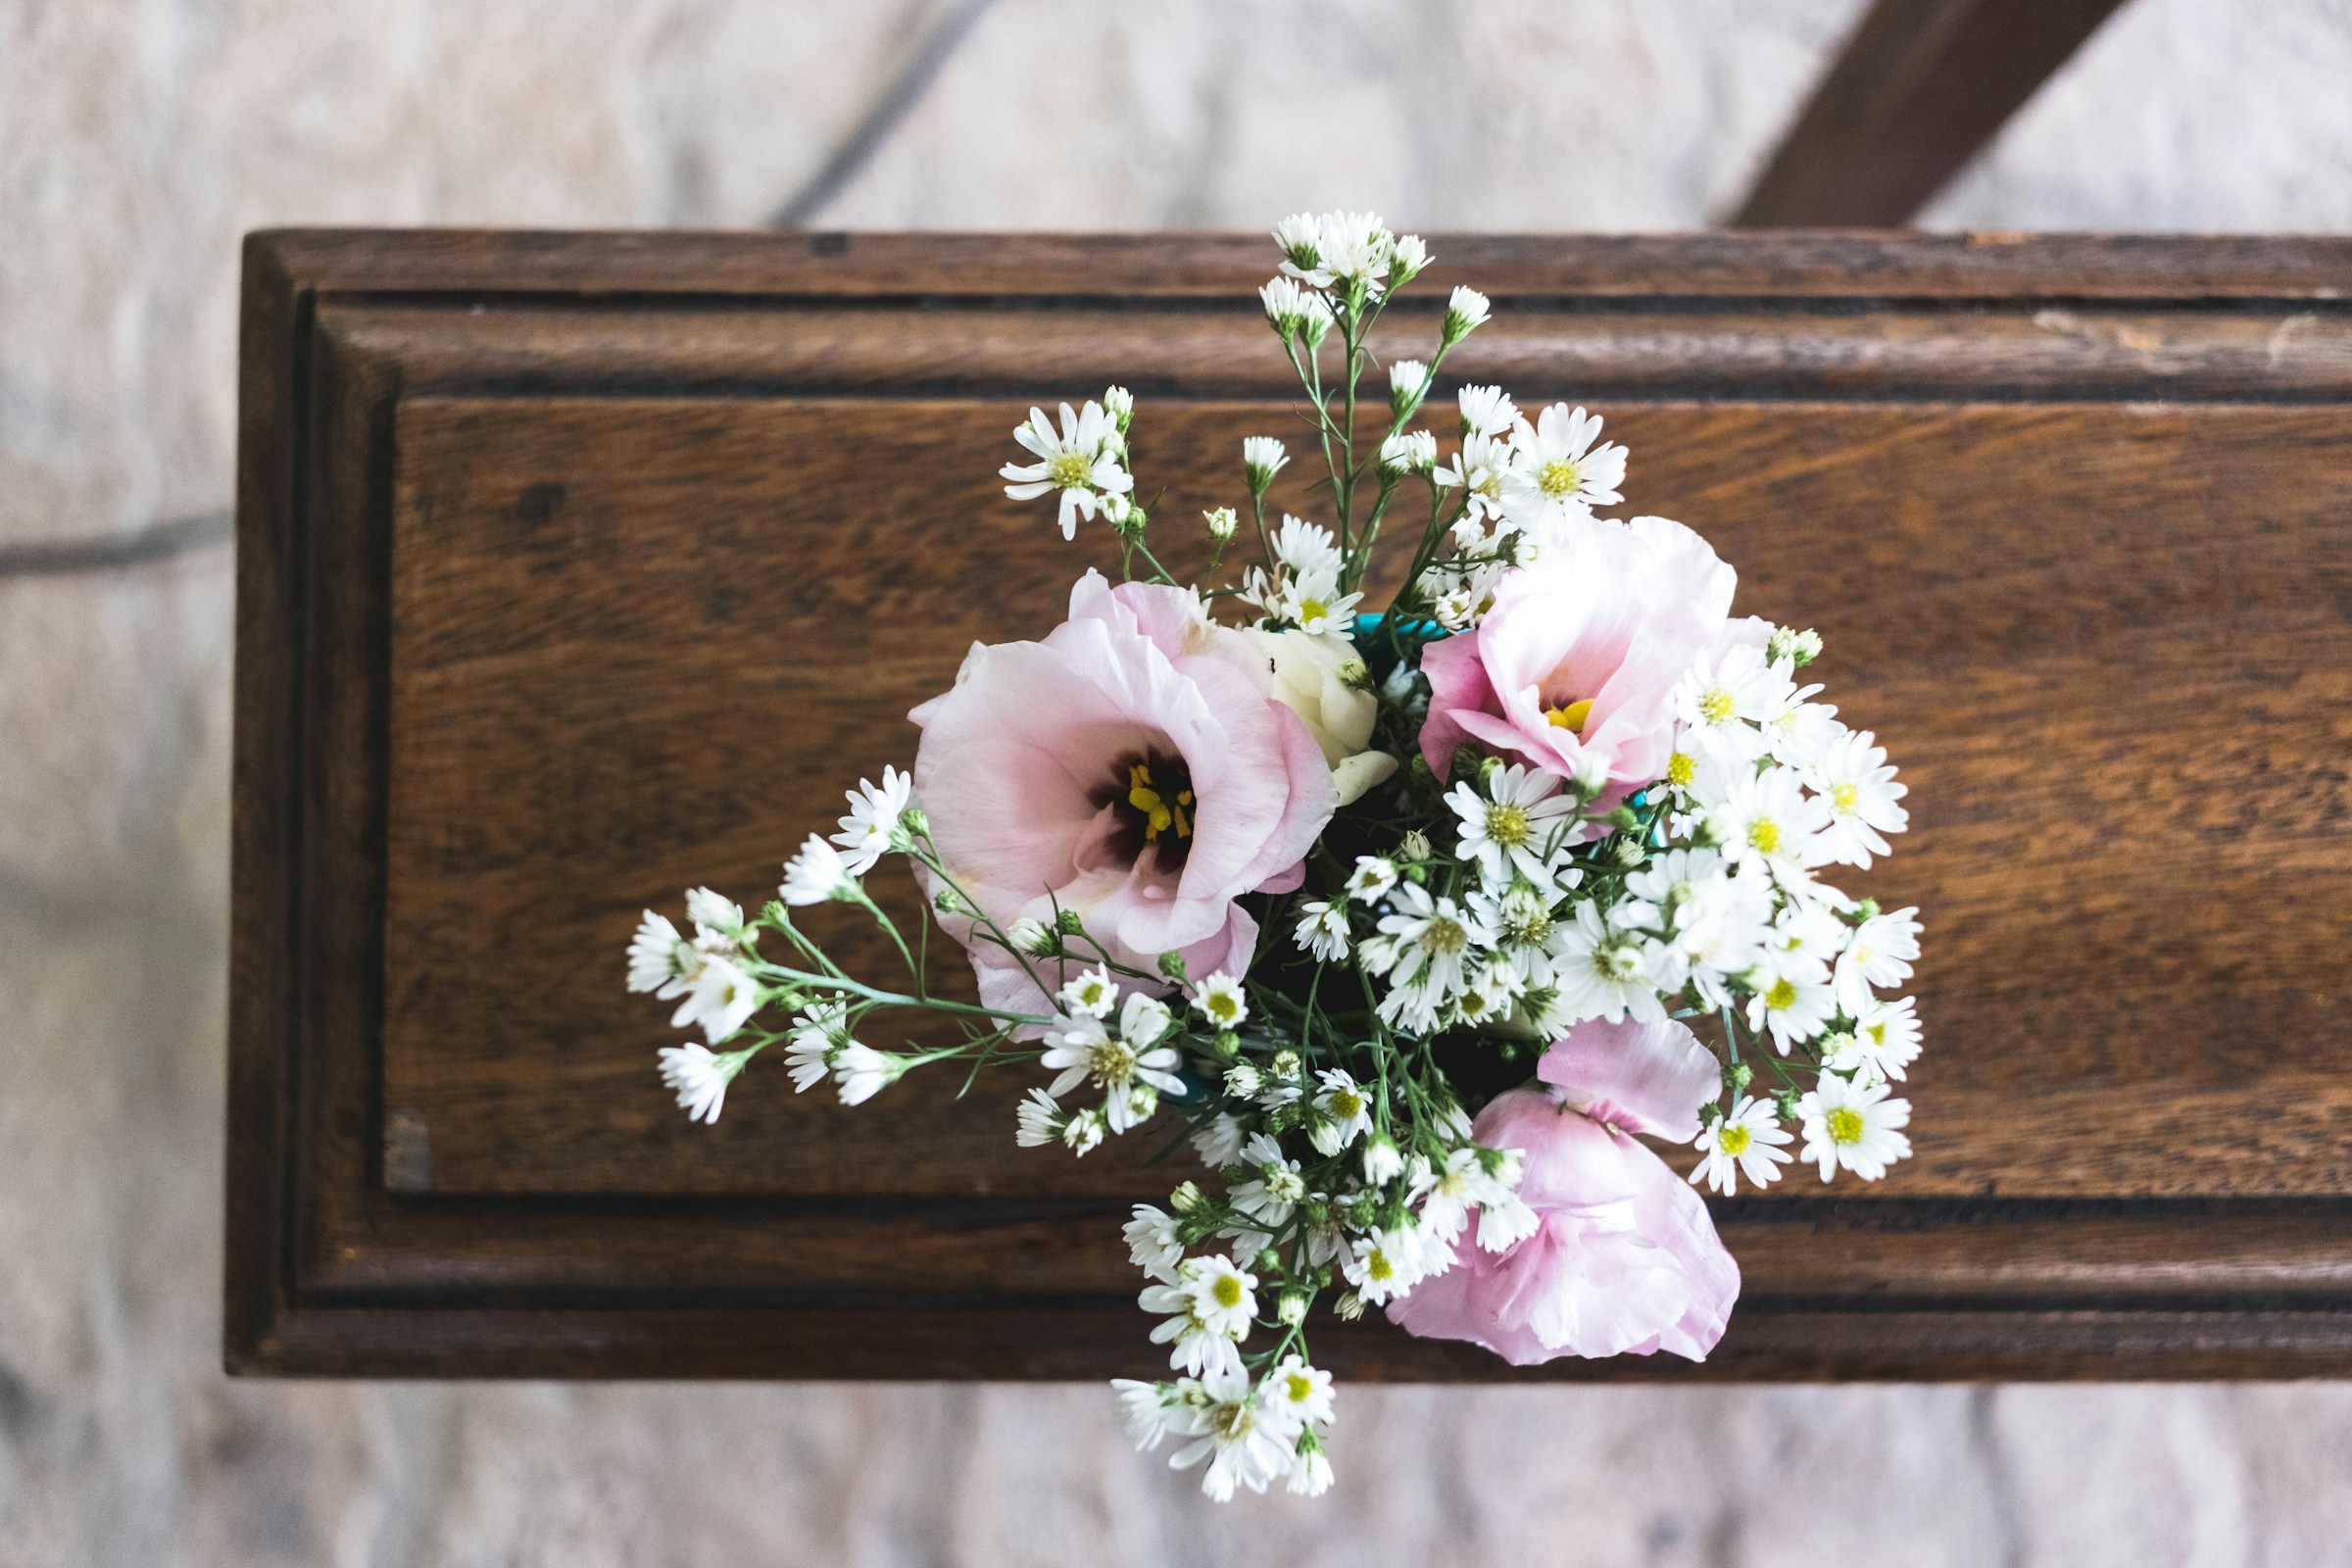 Flowers on a coffin | Source: Unsplash